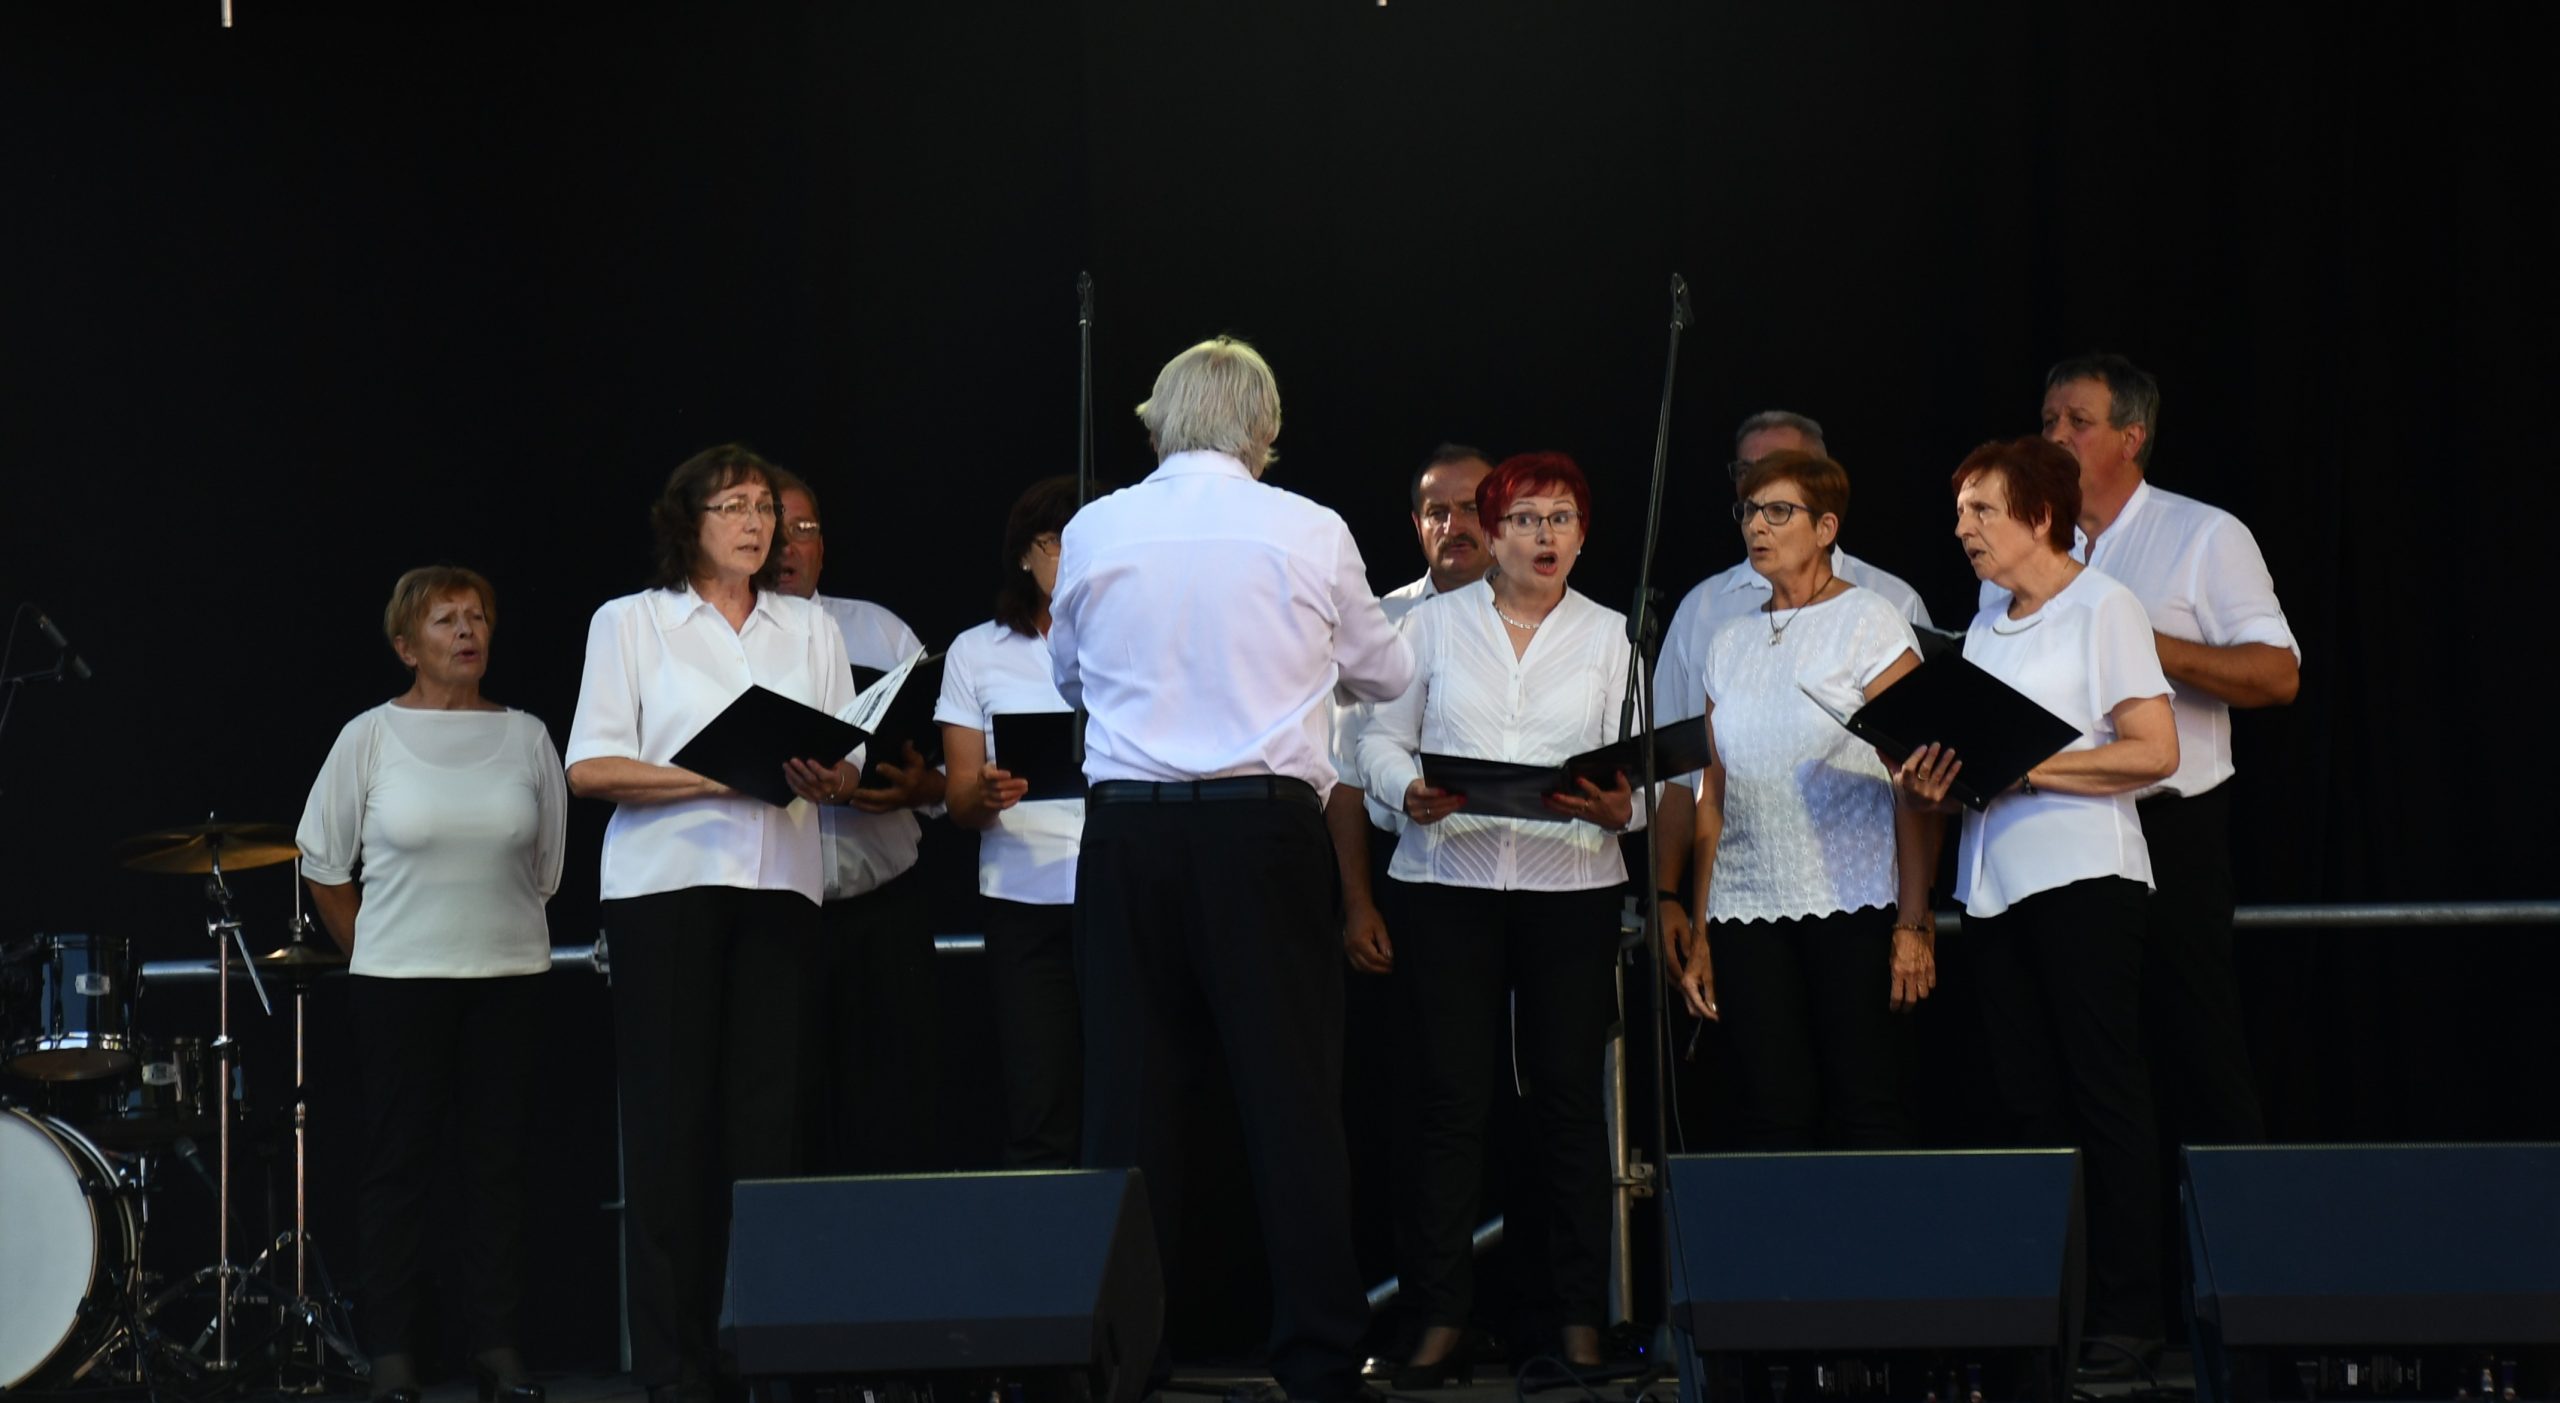 Komorni zbor iz Monoštra, Madžarska